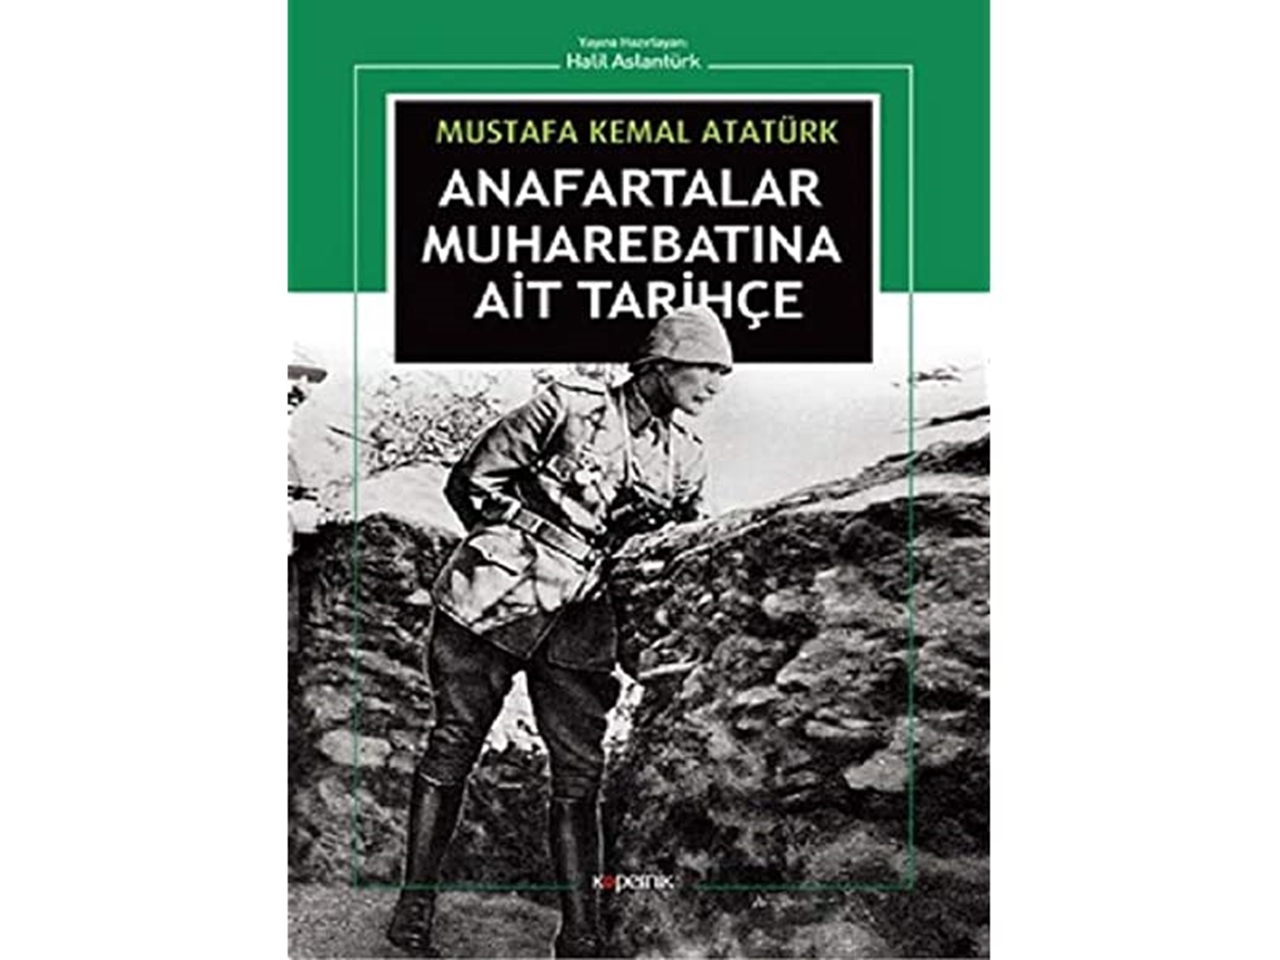 history of the battle of anafartalar